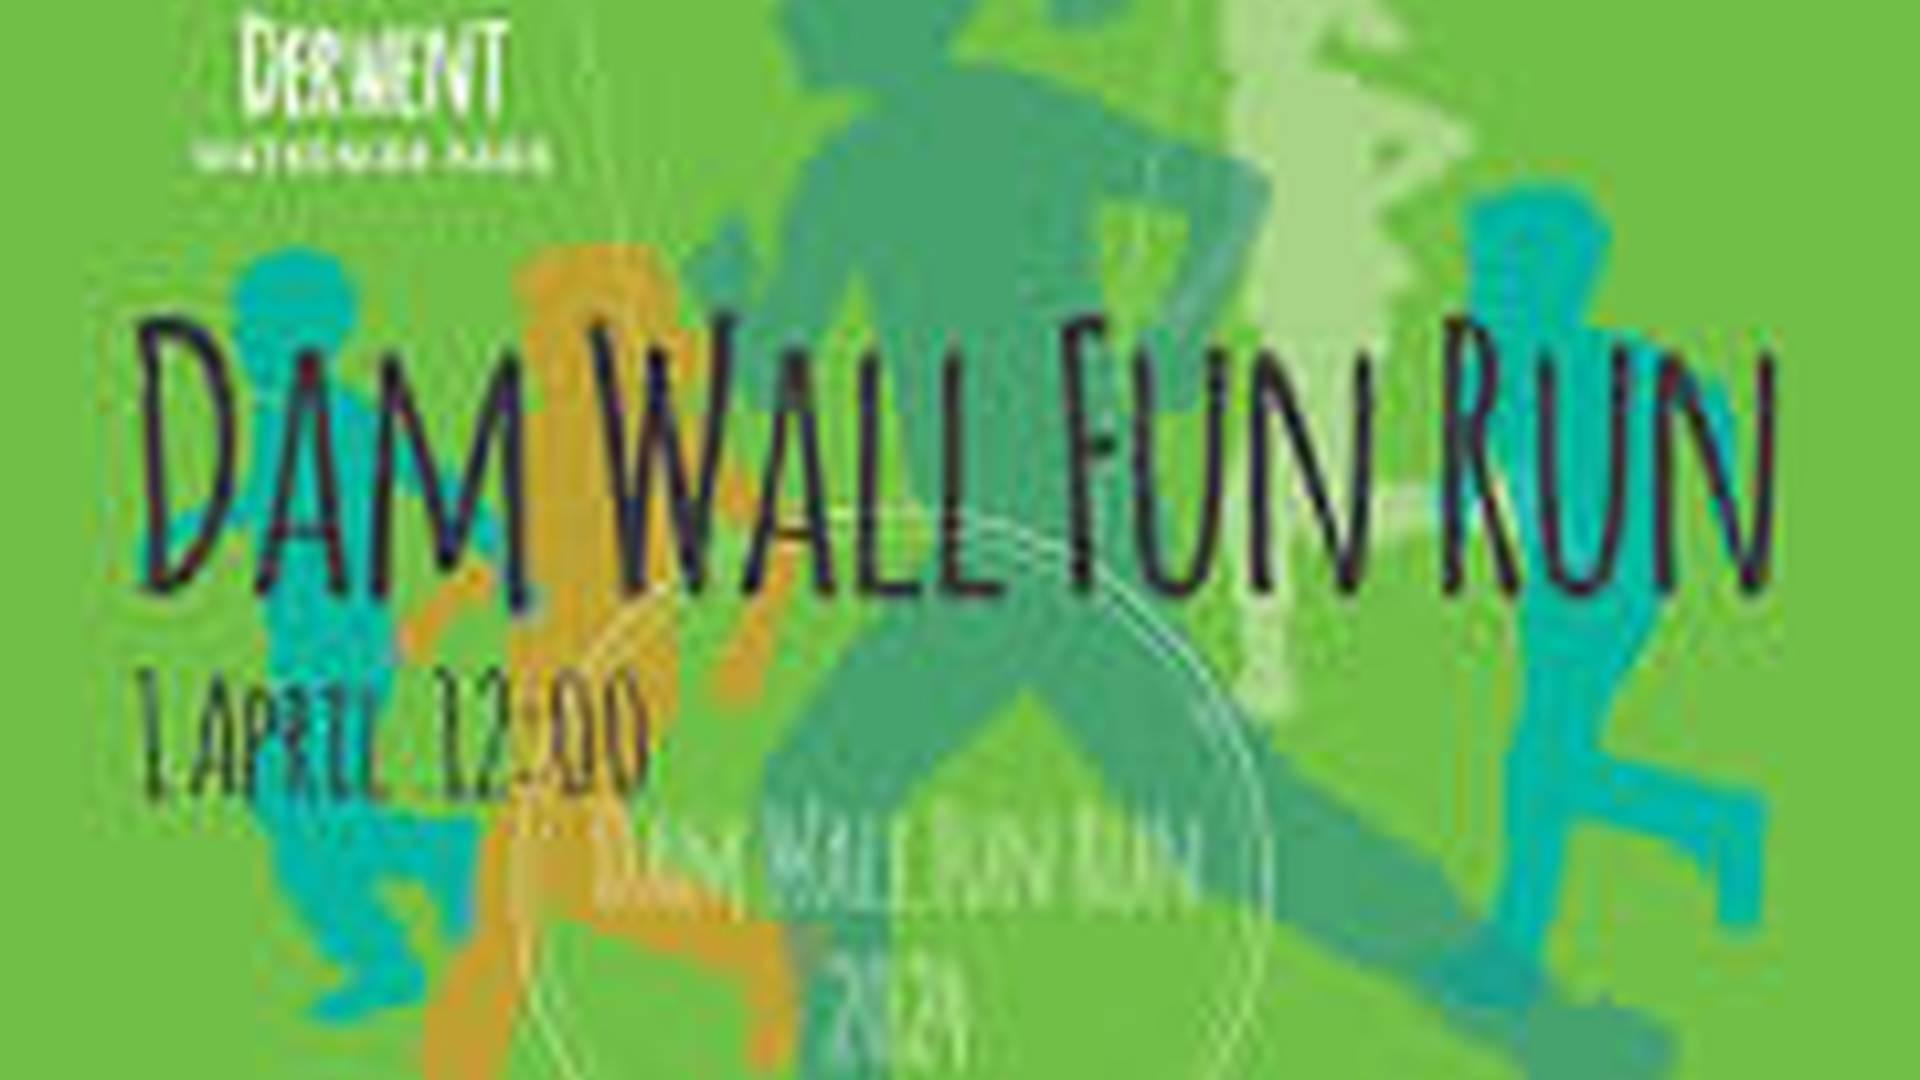 Dam Wall Fun Run photo